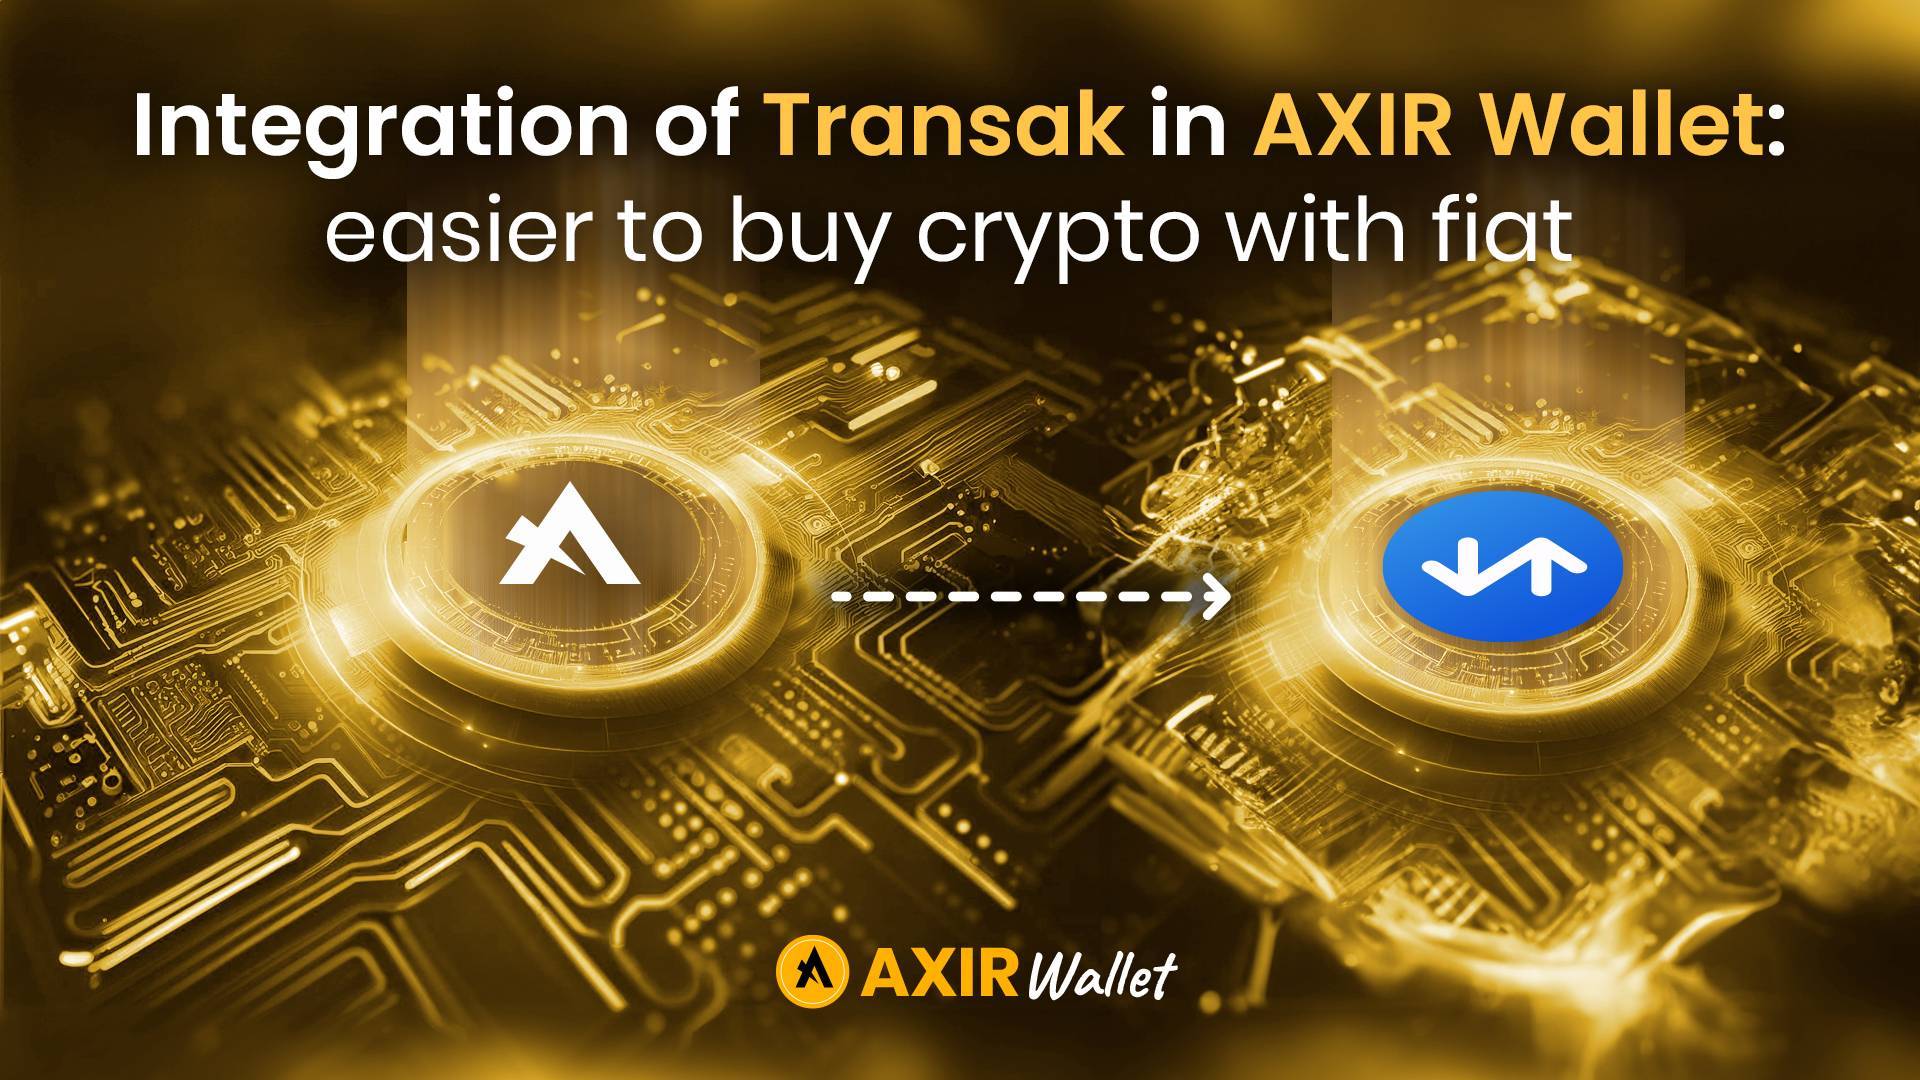 Transak and Axir Wallet